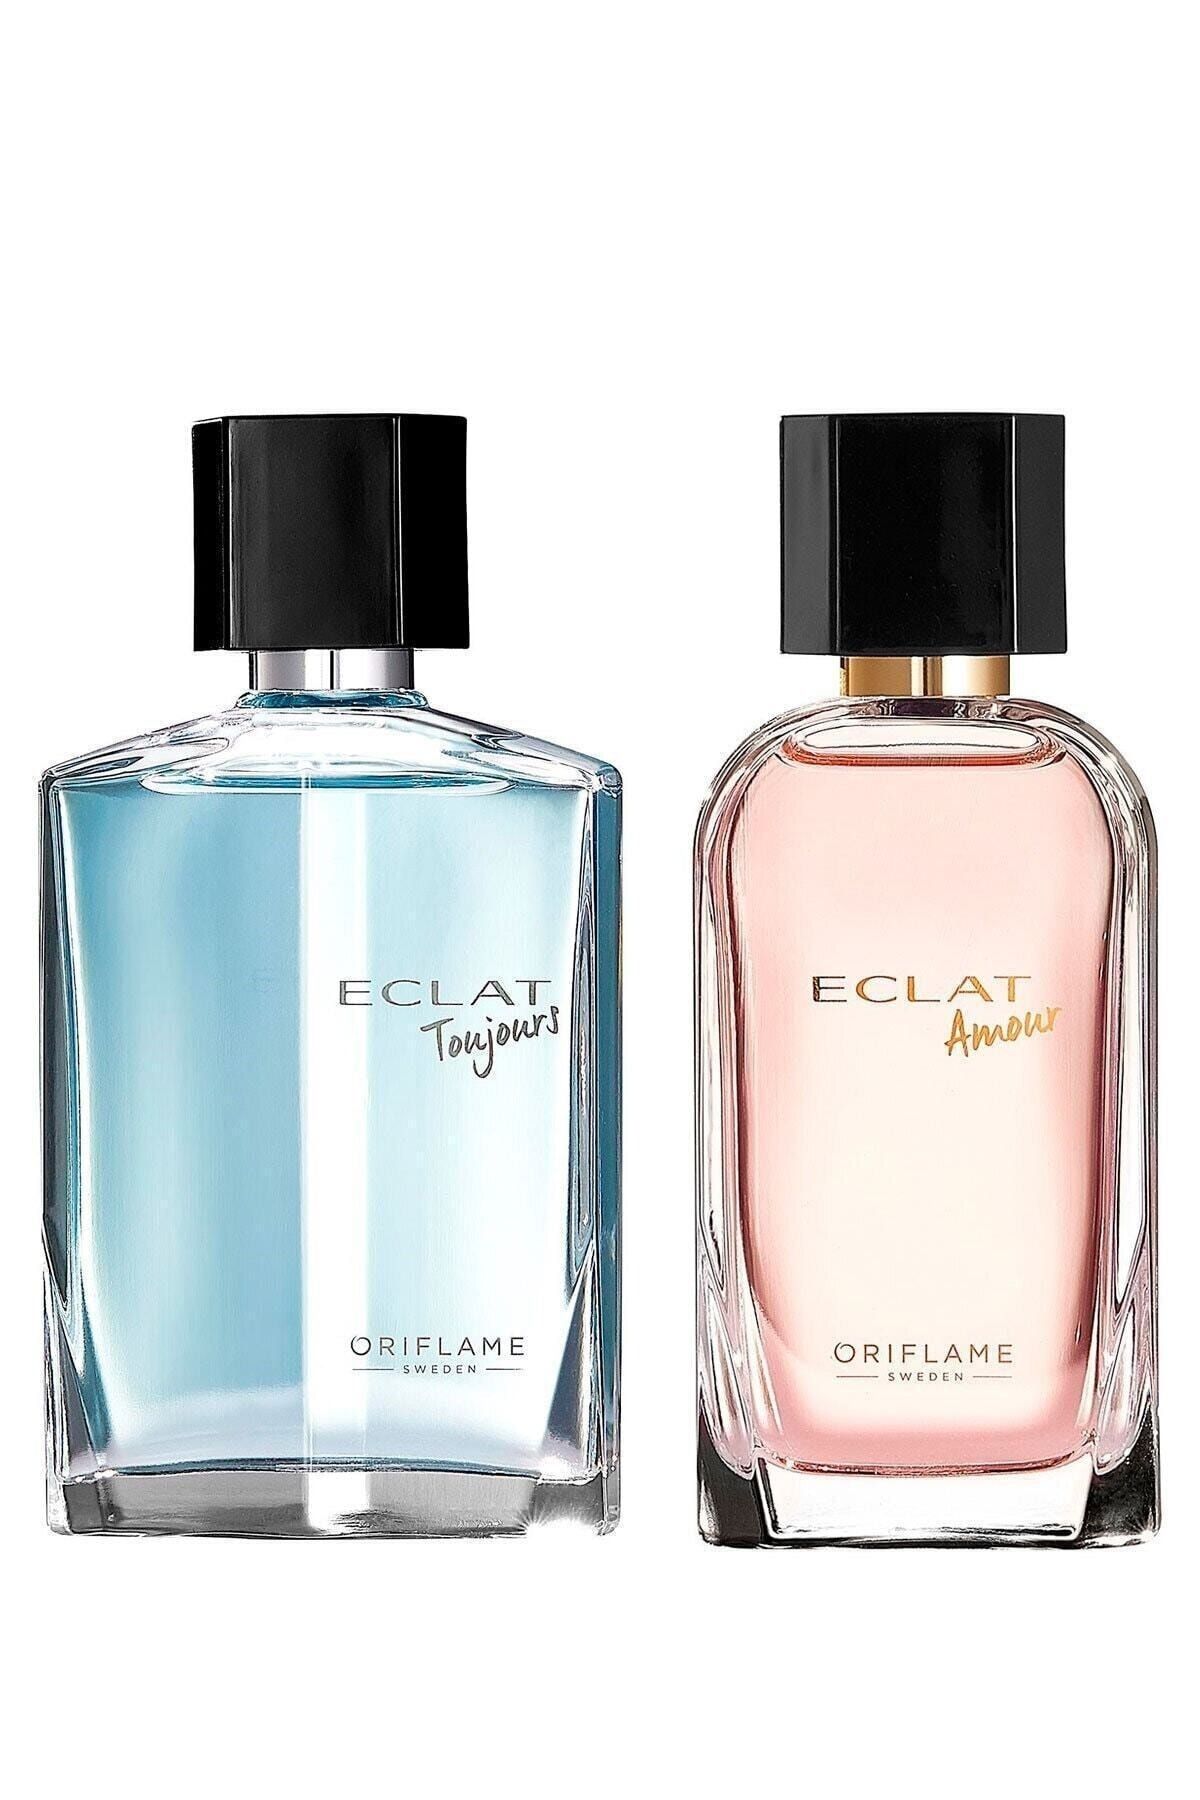 Oriflame Eclat Toujours Erkek Parfüm 75 ml + Eclat Amour Edt Kadın Parfüm 50 ml. Set